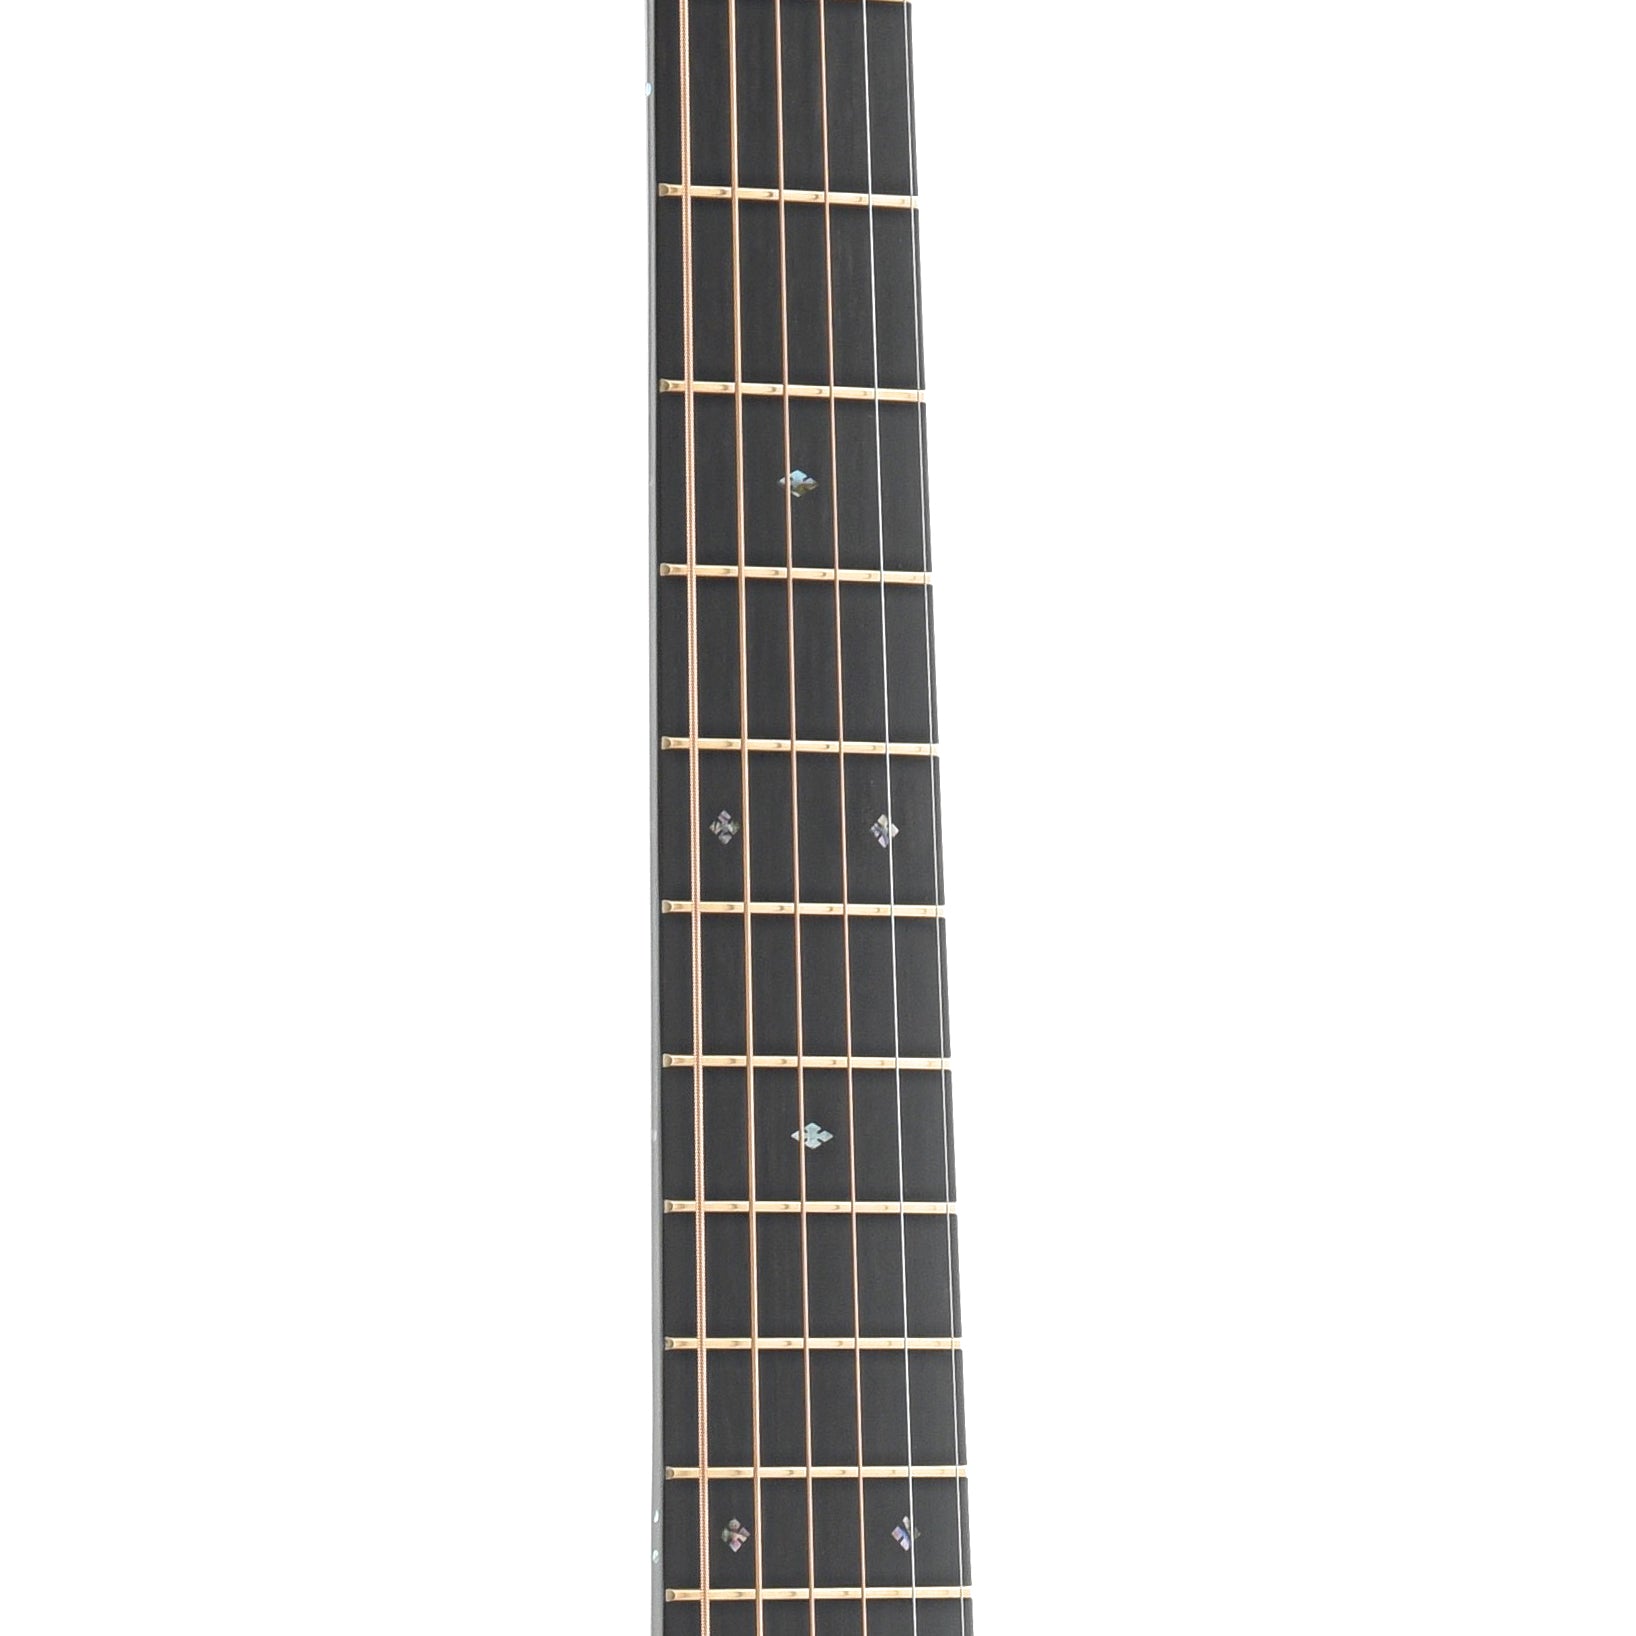 Fretboard of Martin OM-28E Modern Deluxe Guitar